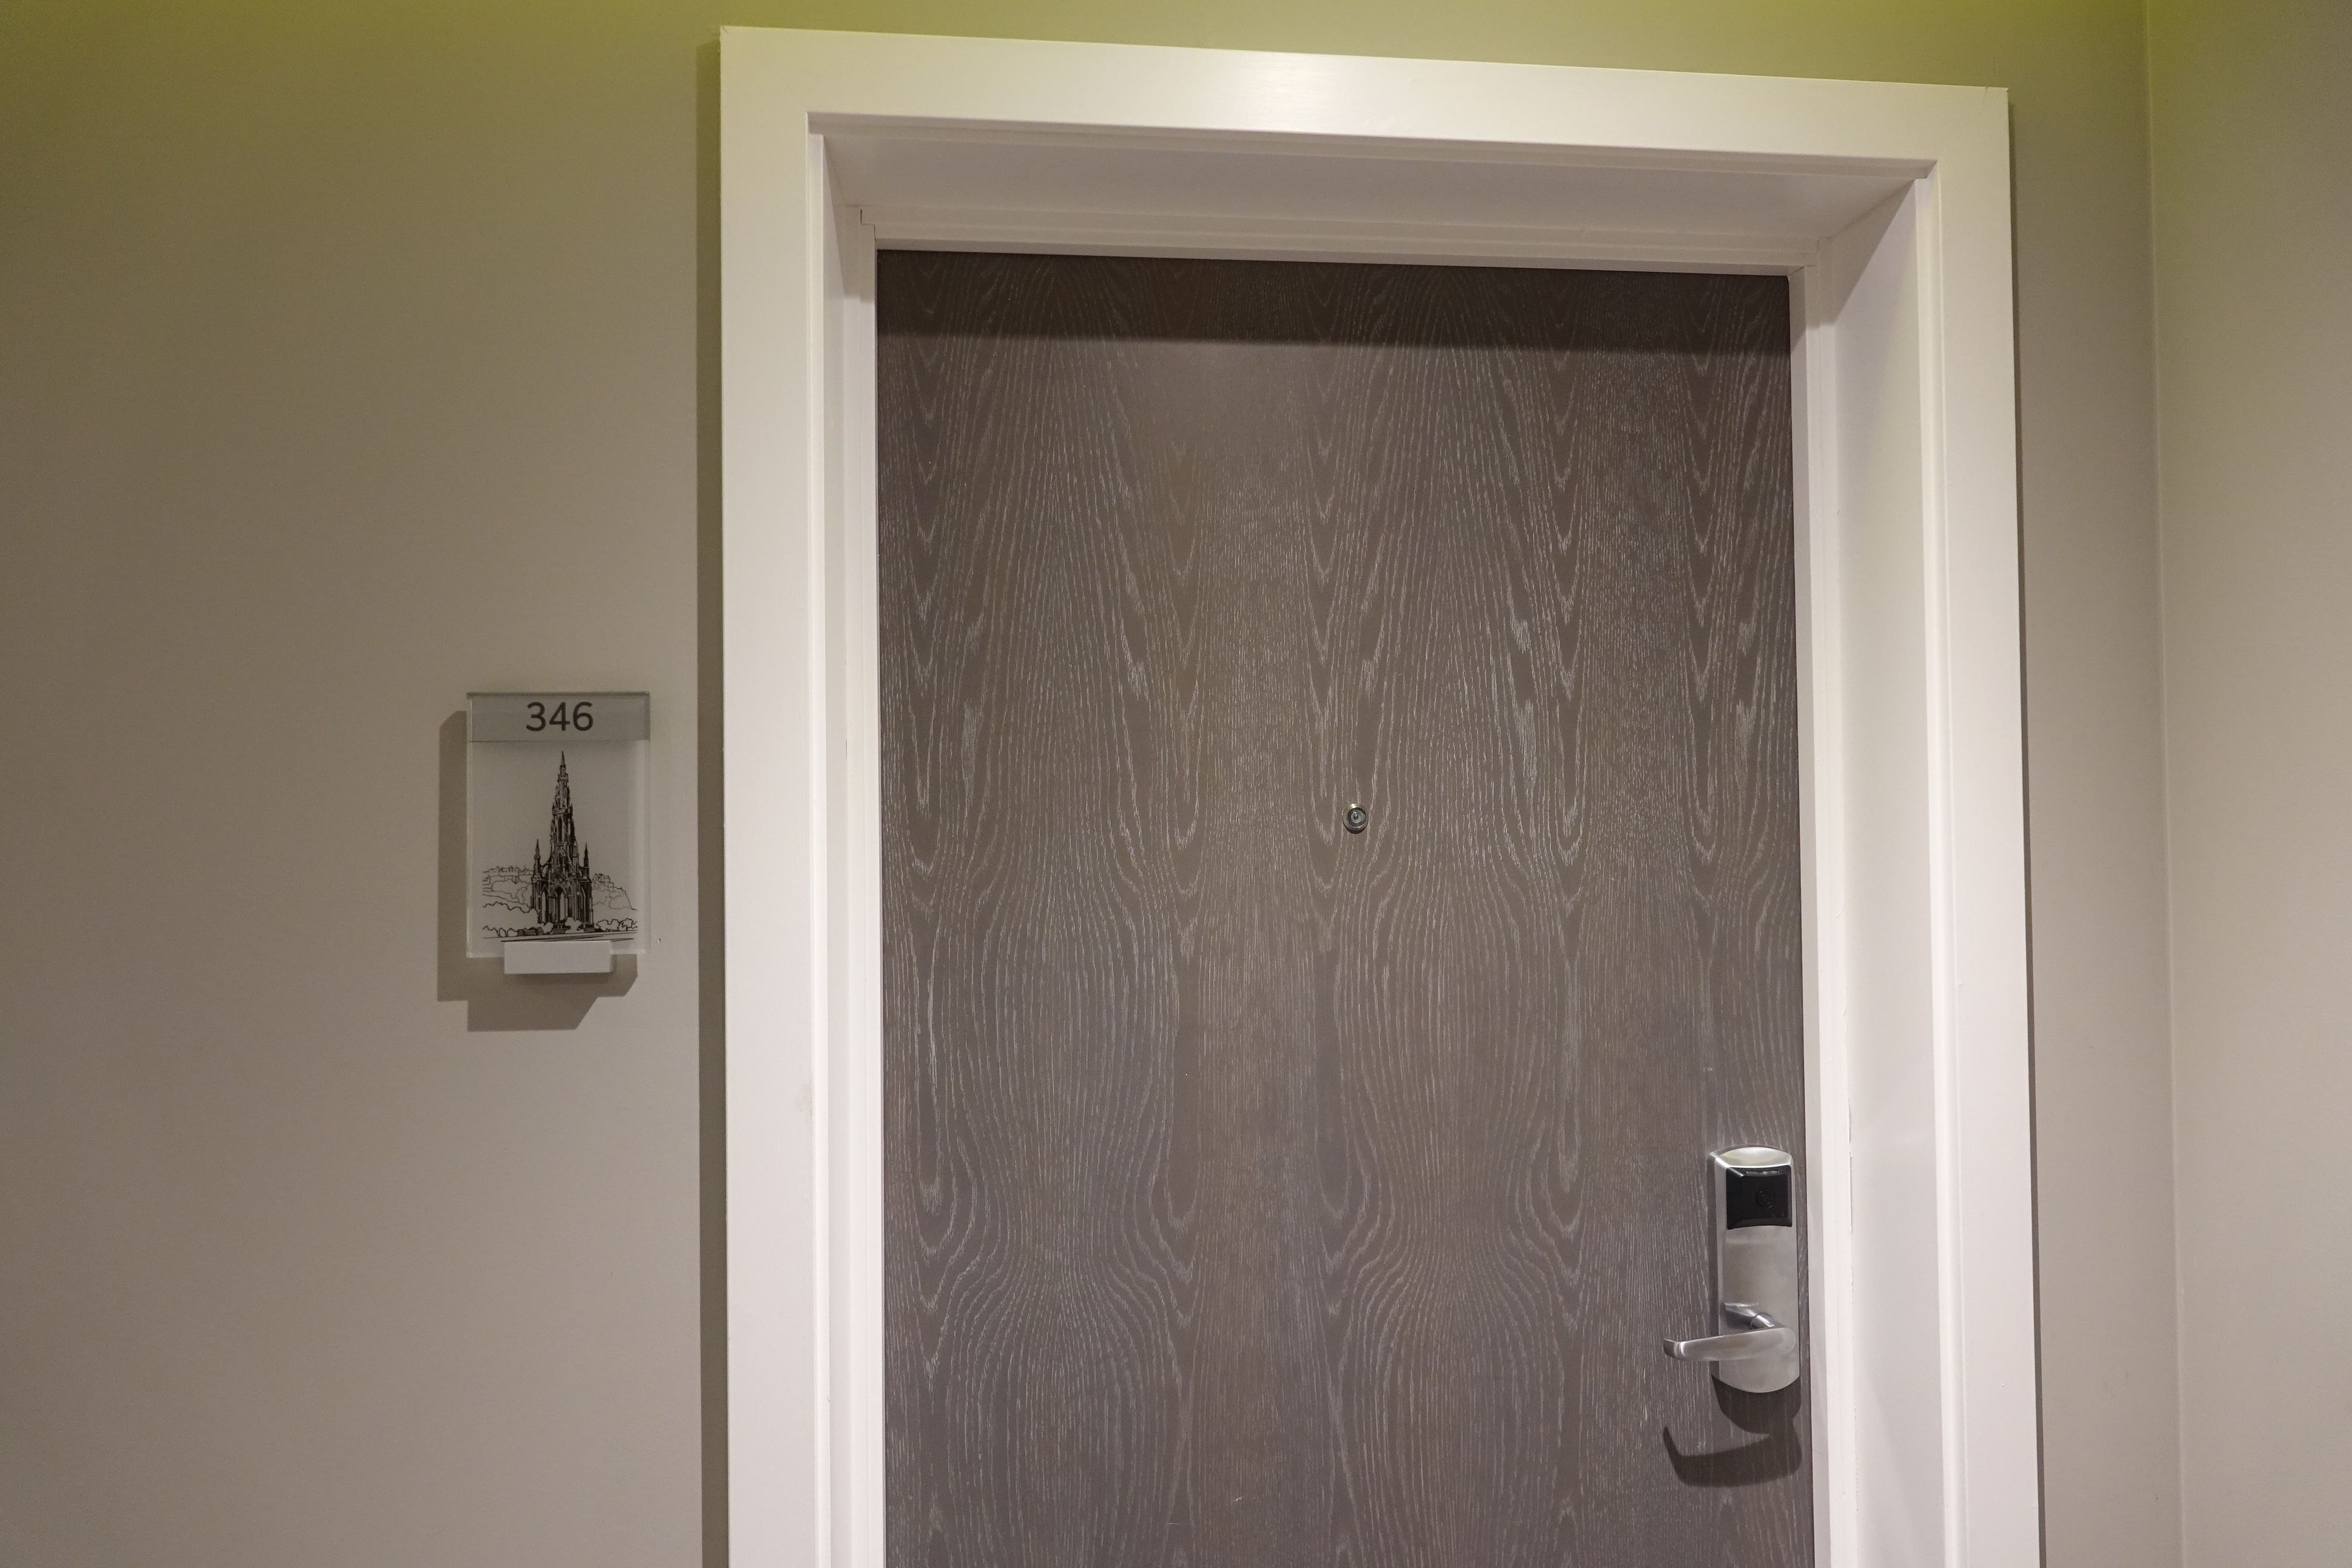 a door with a doorknob and a sign